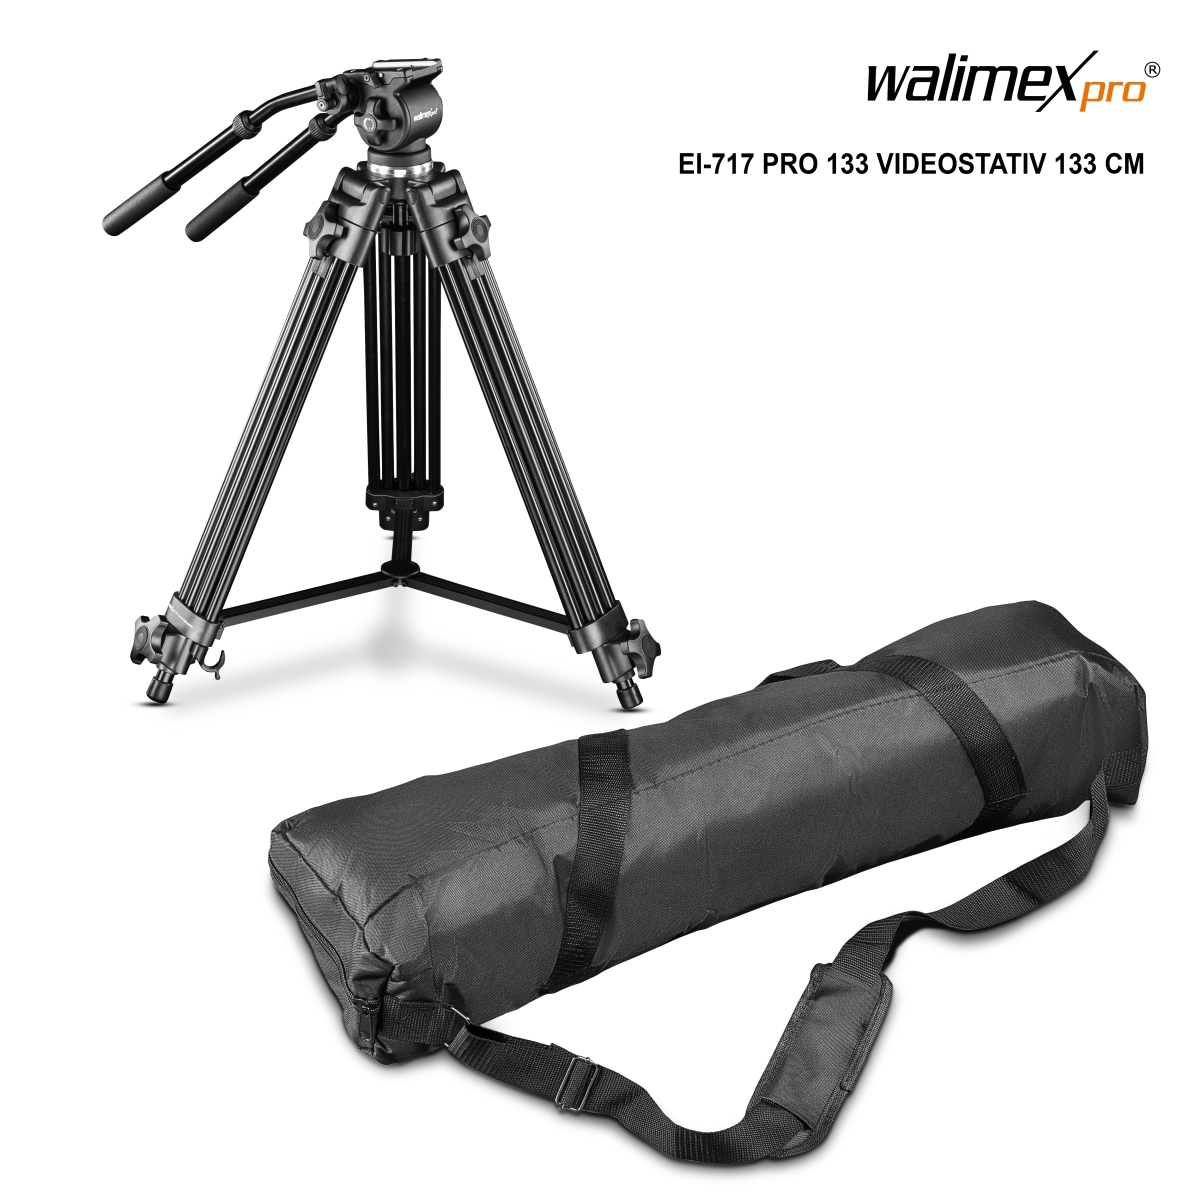 Walimex pro EI-717 Pro 133 Videostativ 133cm